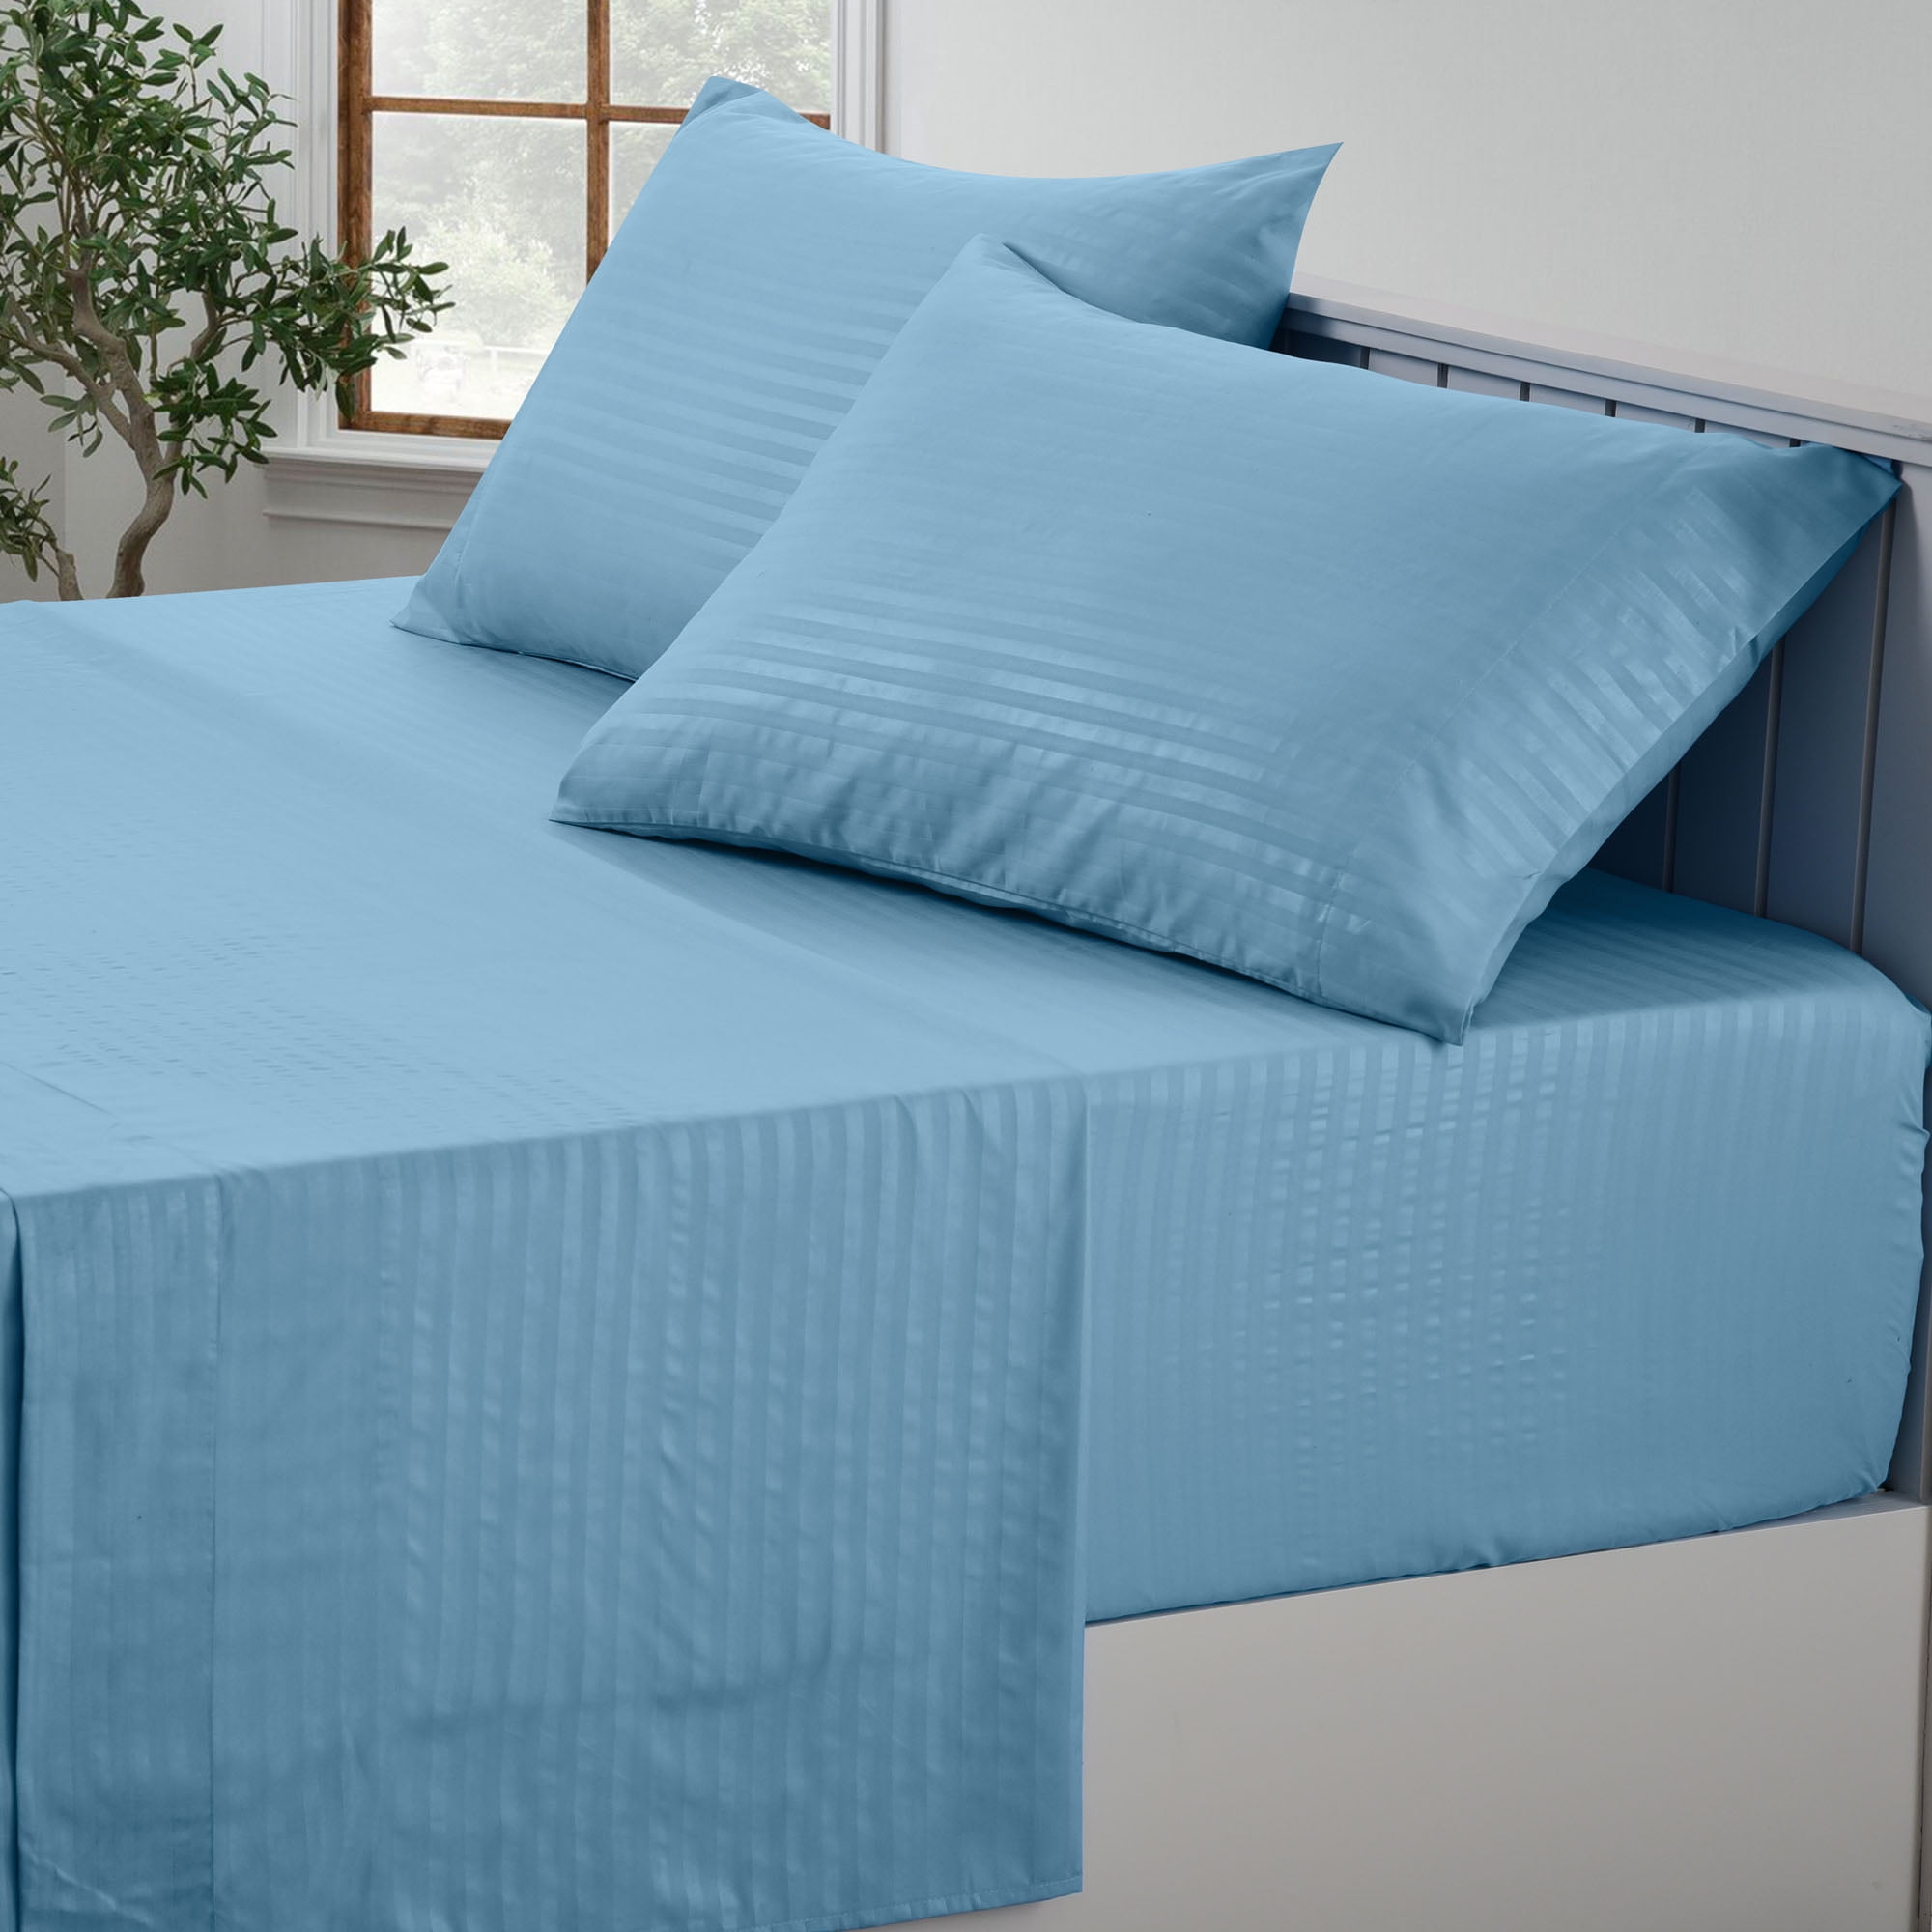 Flat Sheets Pillow cases Polycotton Luxury Plain Dyed Single Double Super King 